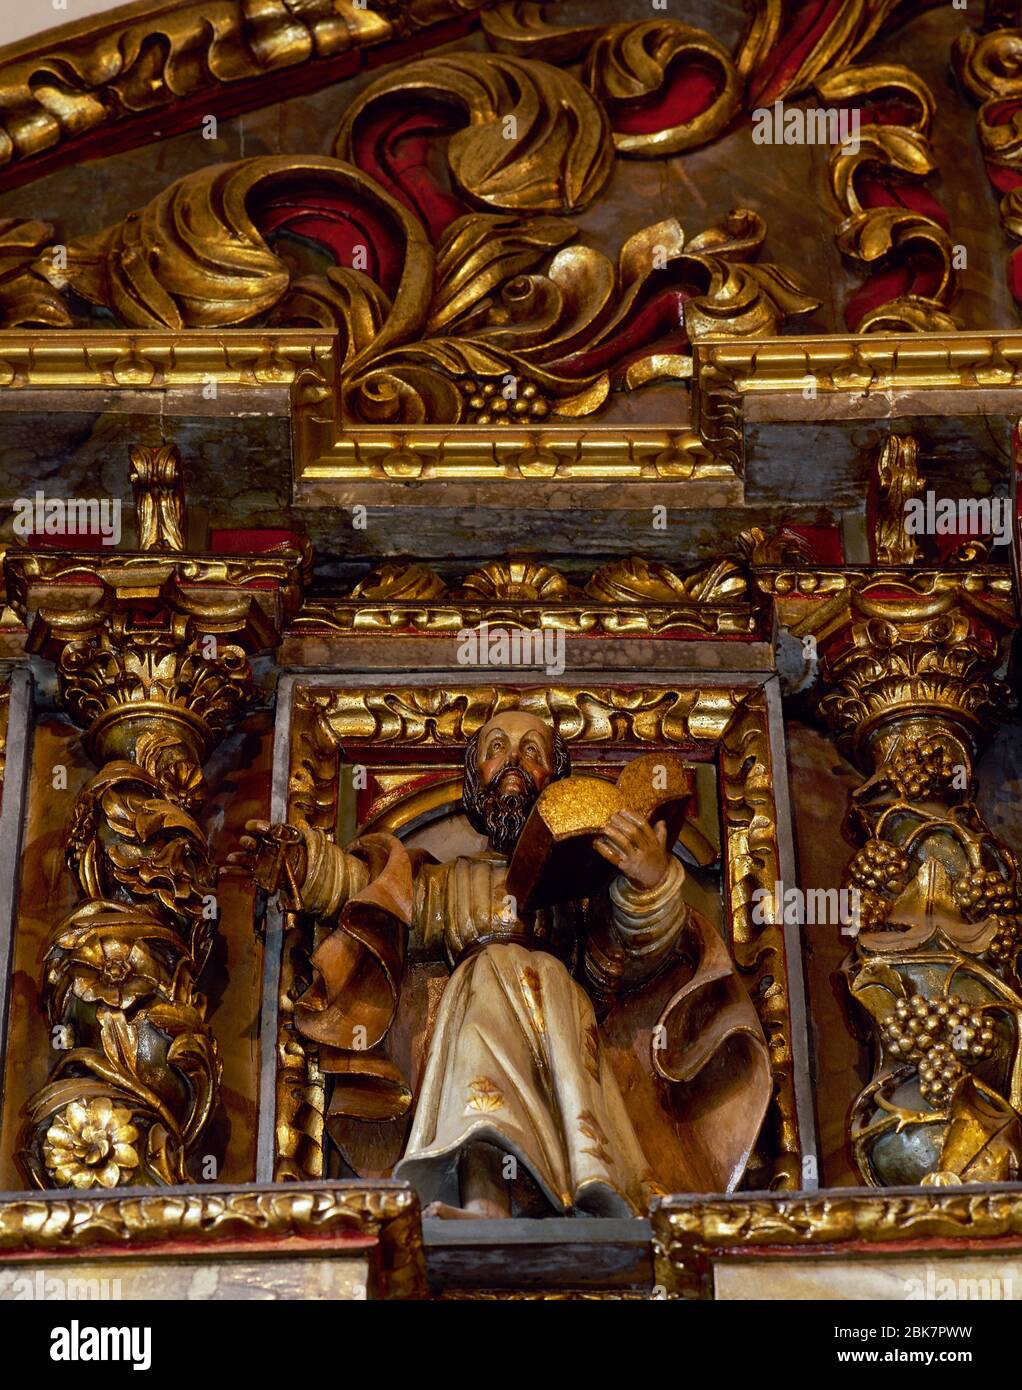 Apostle saint Peter. Polychrome wood carving sculpture of the Baroque altarpiece (18th century), Sanctuary of San Andres de Teixido, La Coruña province, Galicia, Spain. Stock Photo